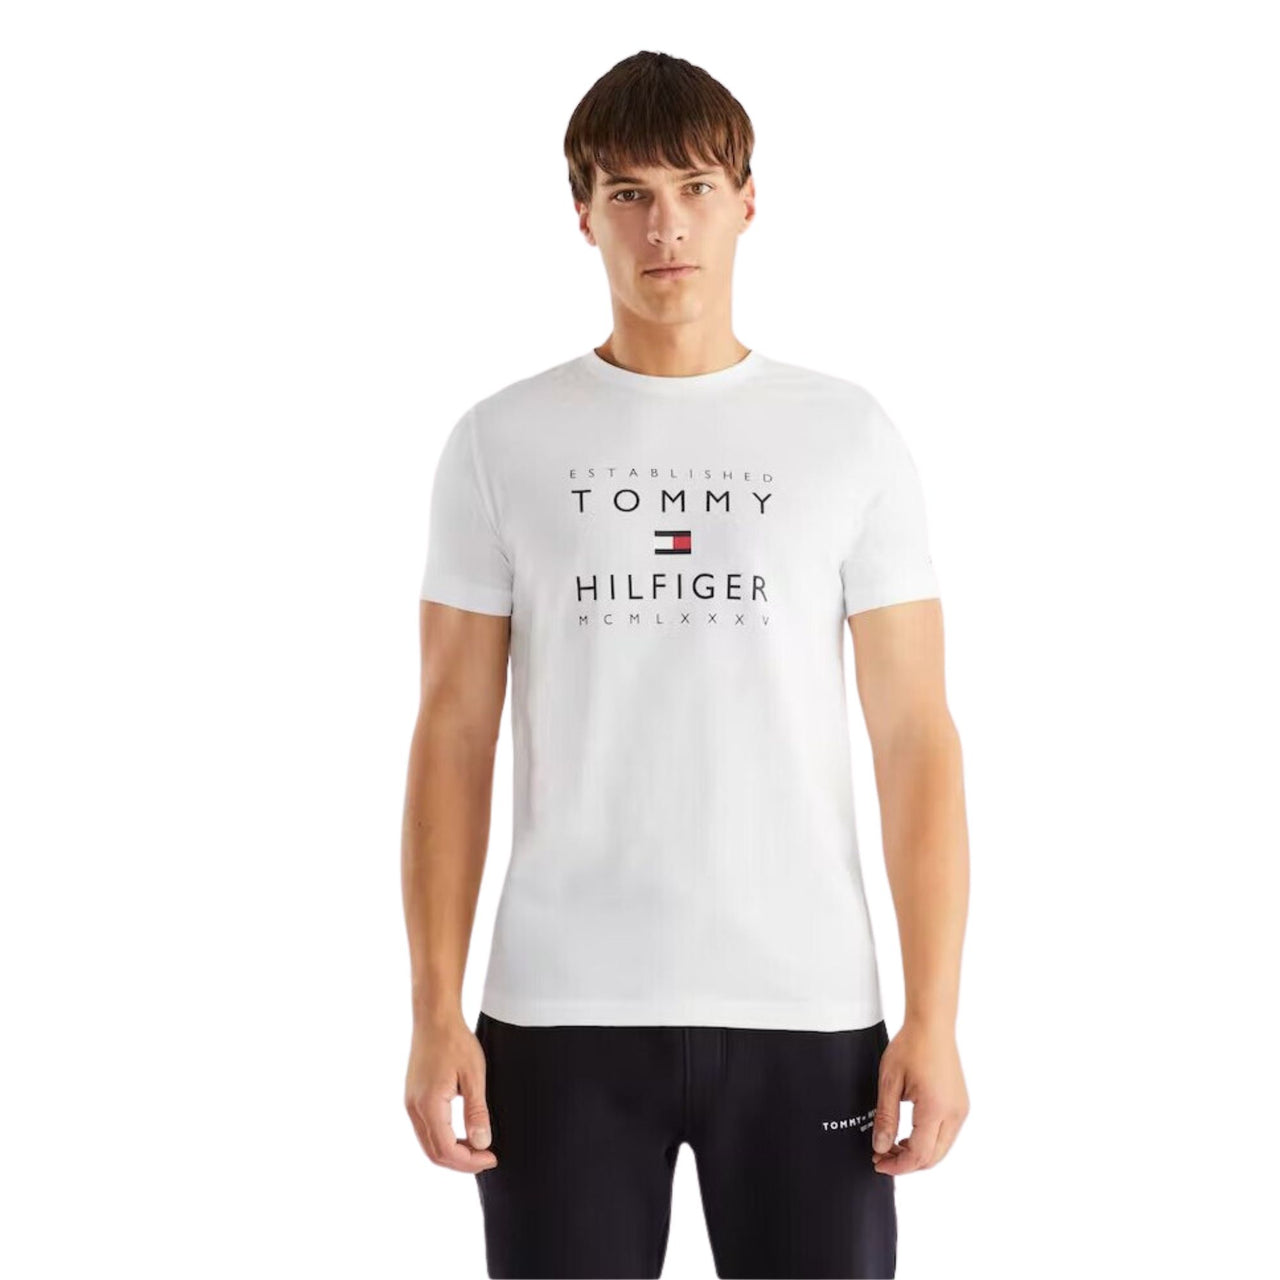 Camisetas Tommy Hilfiger Hombre Established Stacked Tee